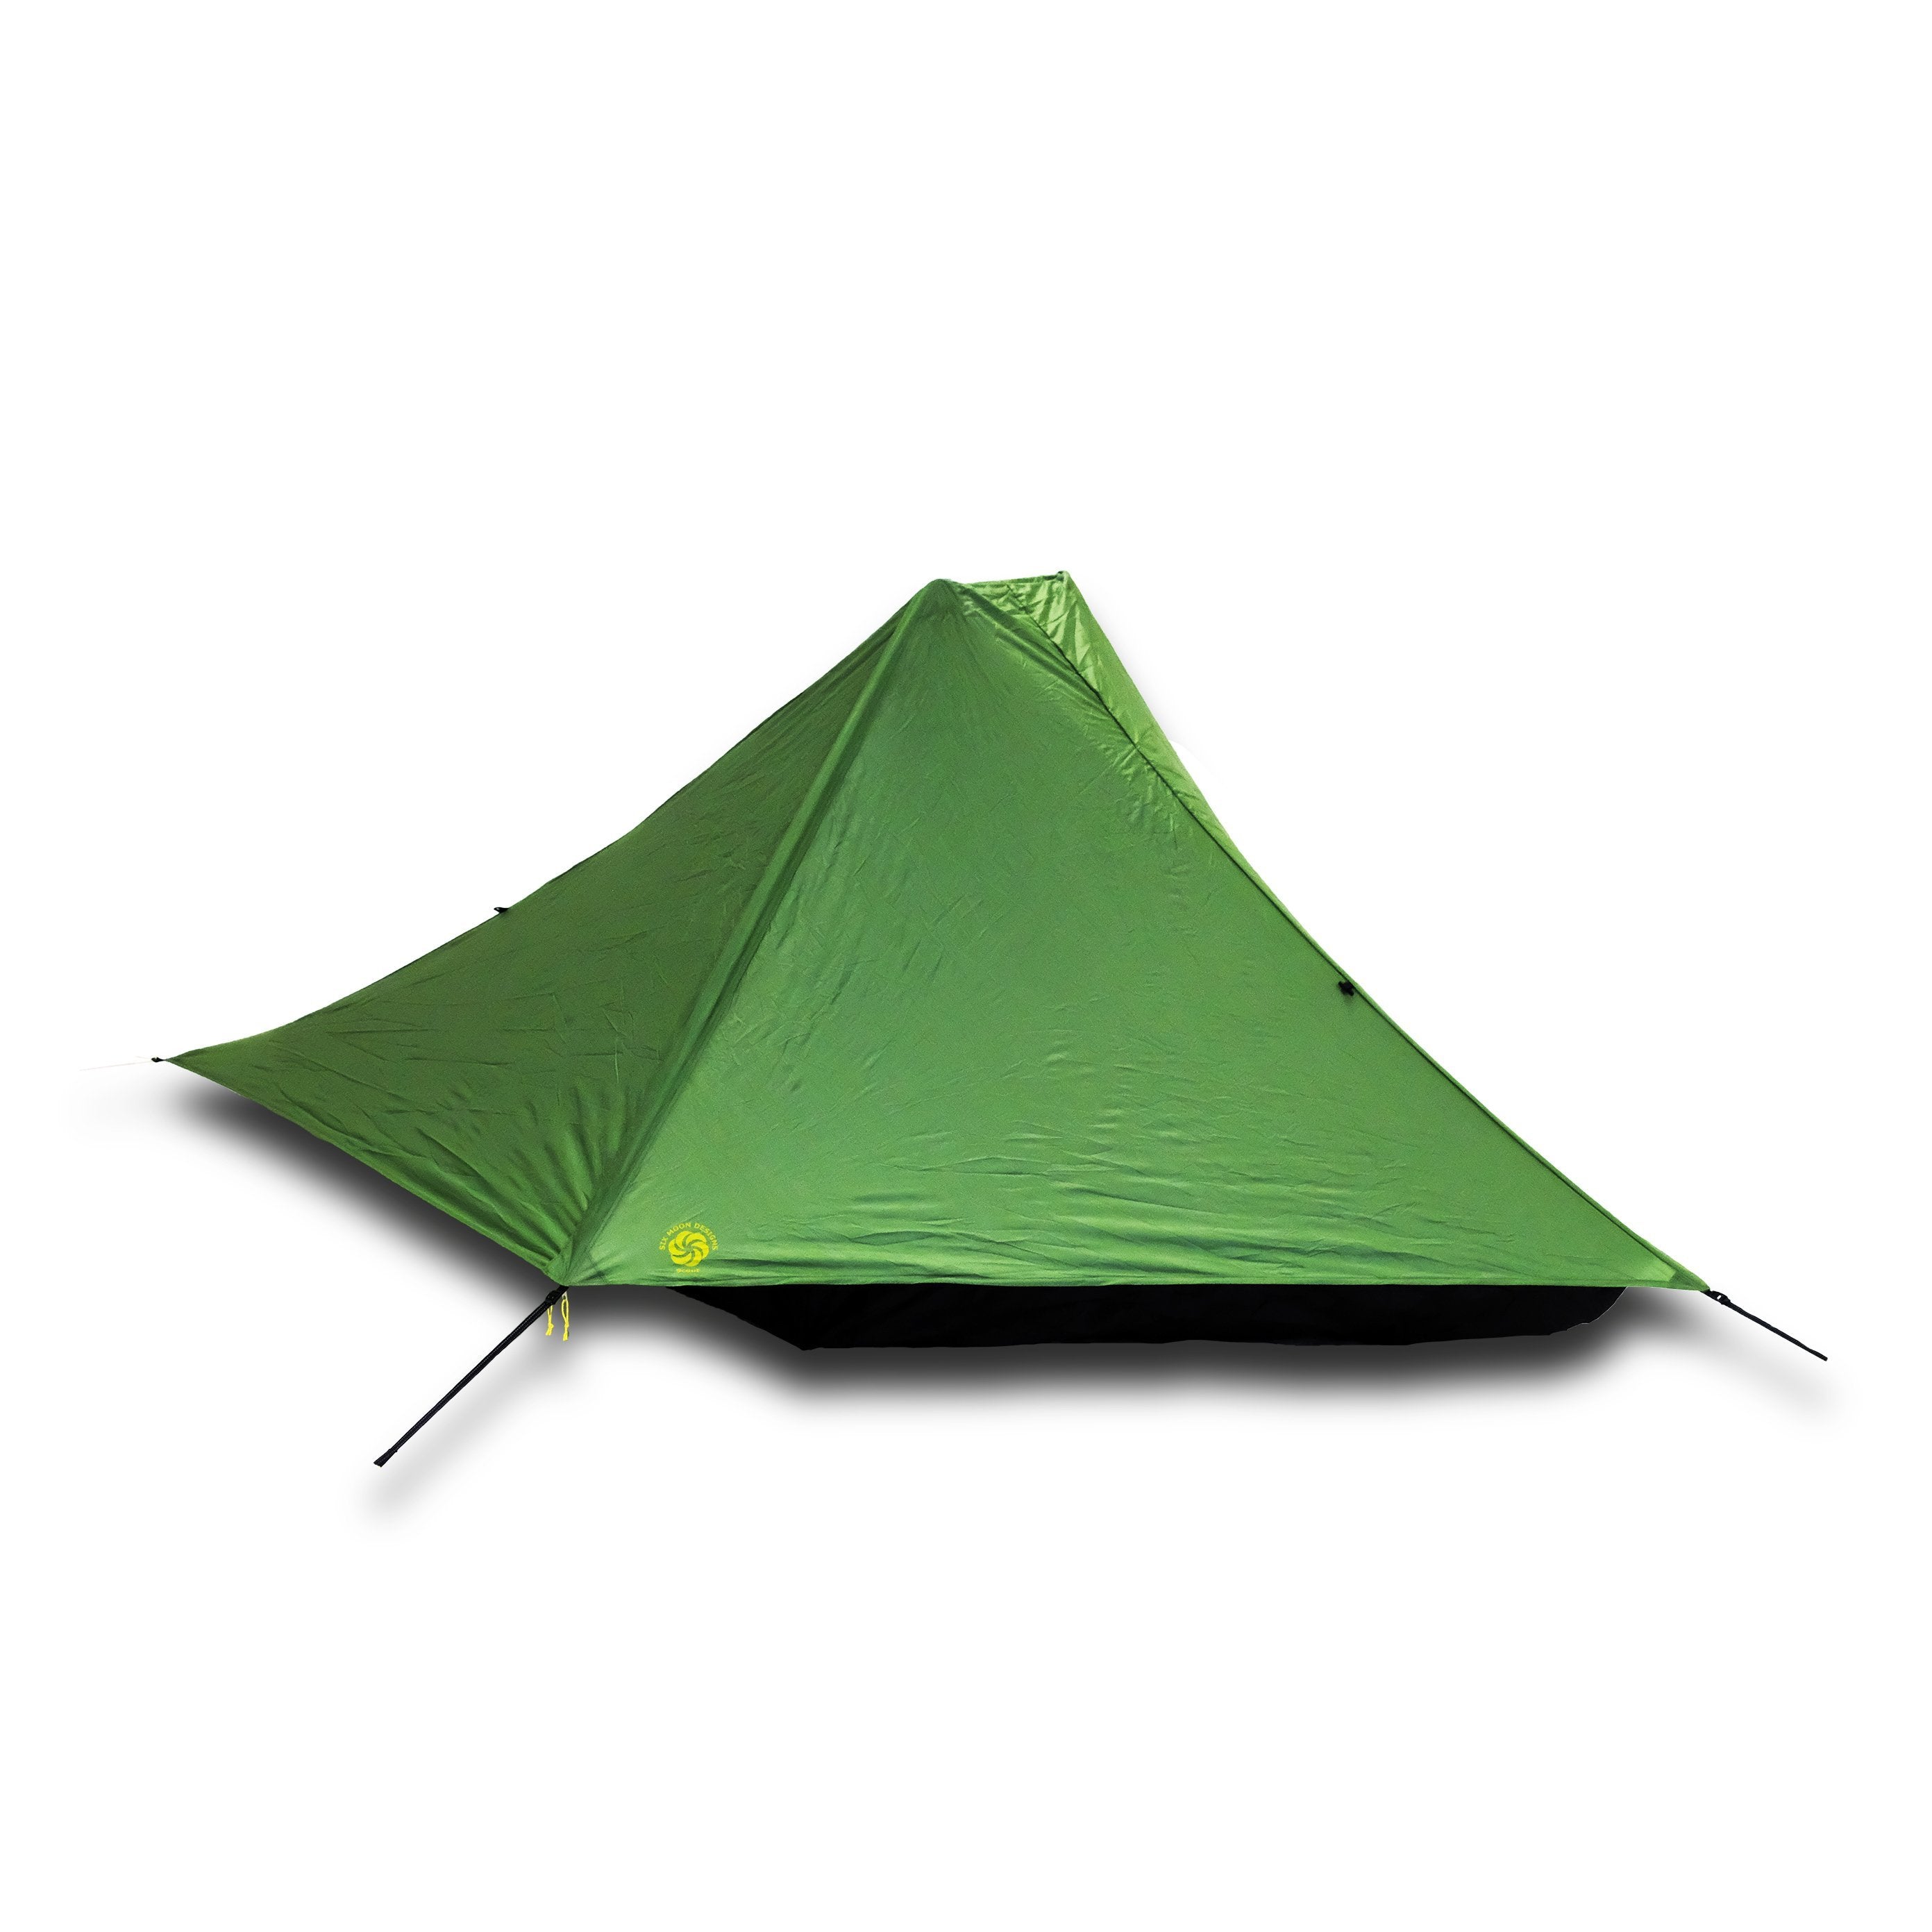 Ultralight Backpacks, Tents, Tarps, and Travel gear - Six Moon Designs